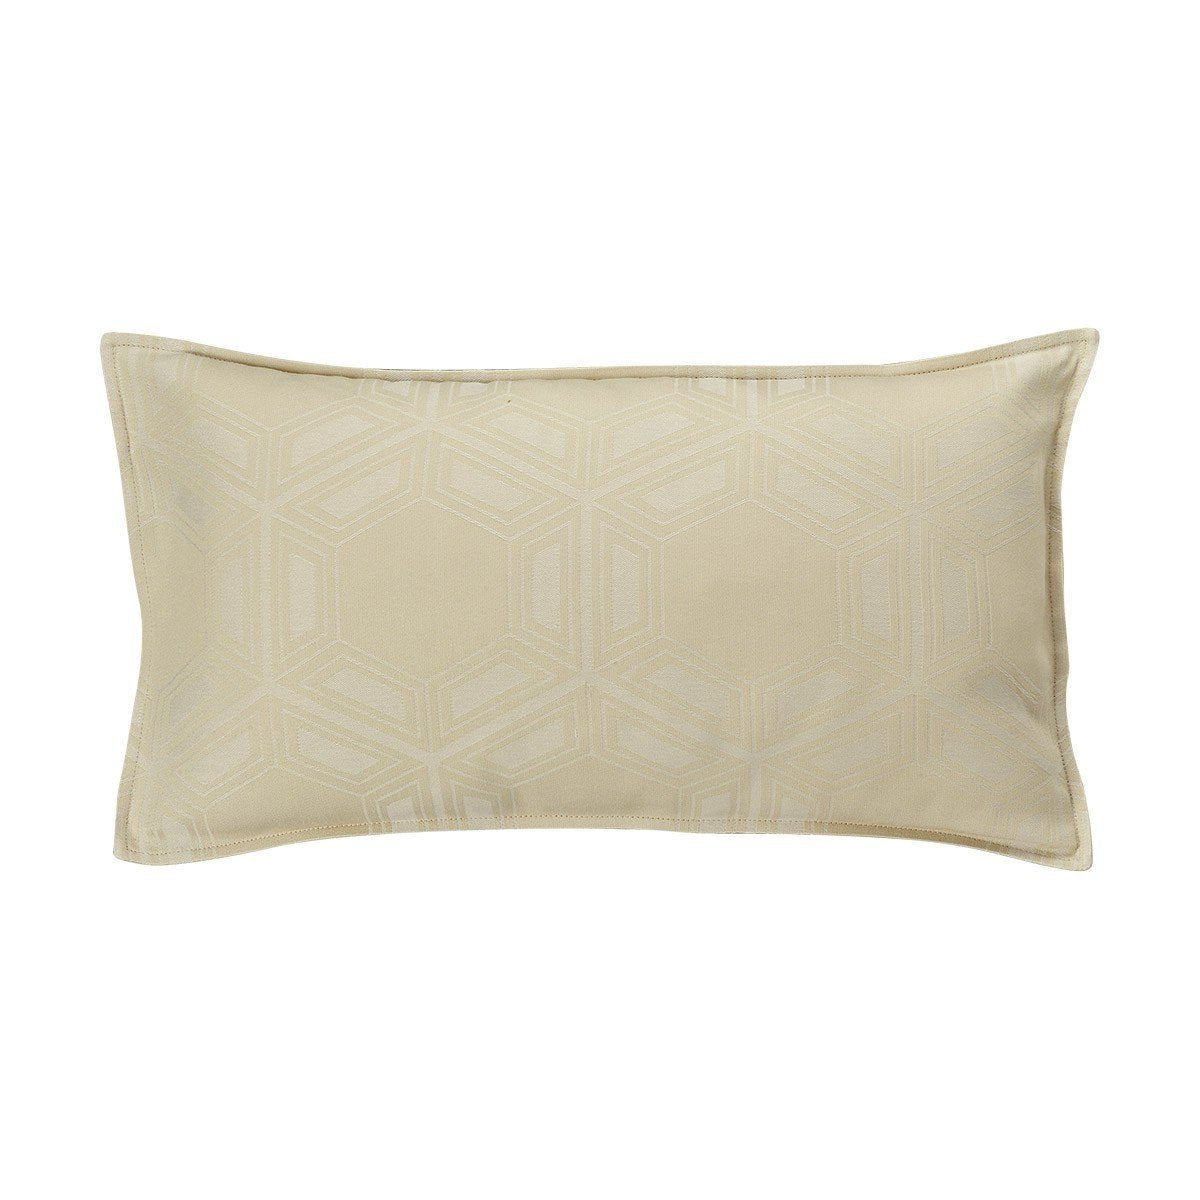 Fig Linens - Le Jacquard Francais Outdoor Collection - Syracuse Beige 12x20 Pillow